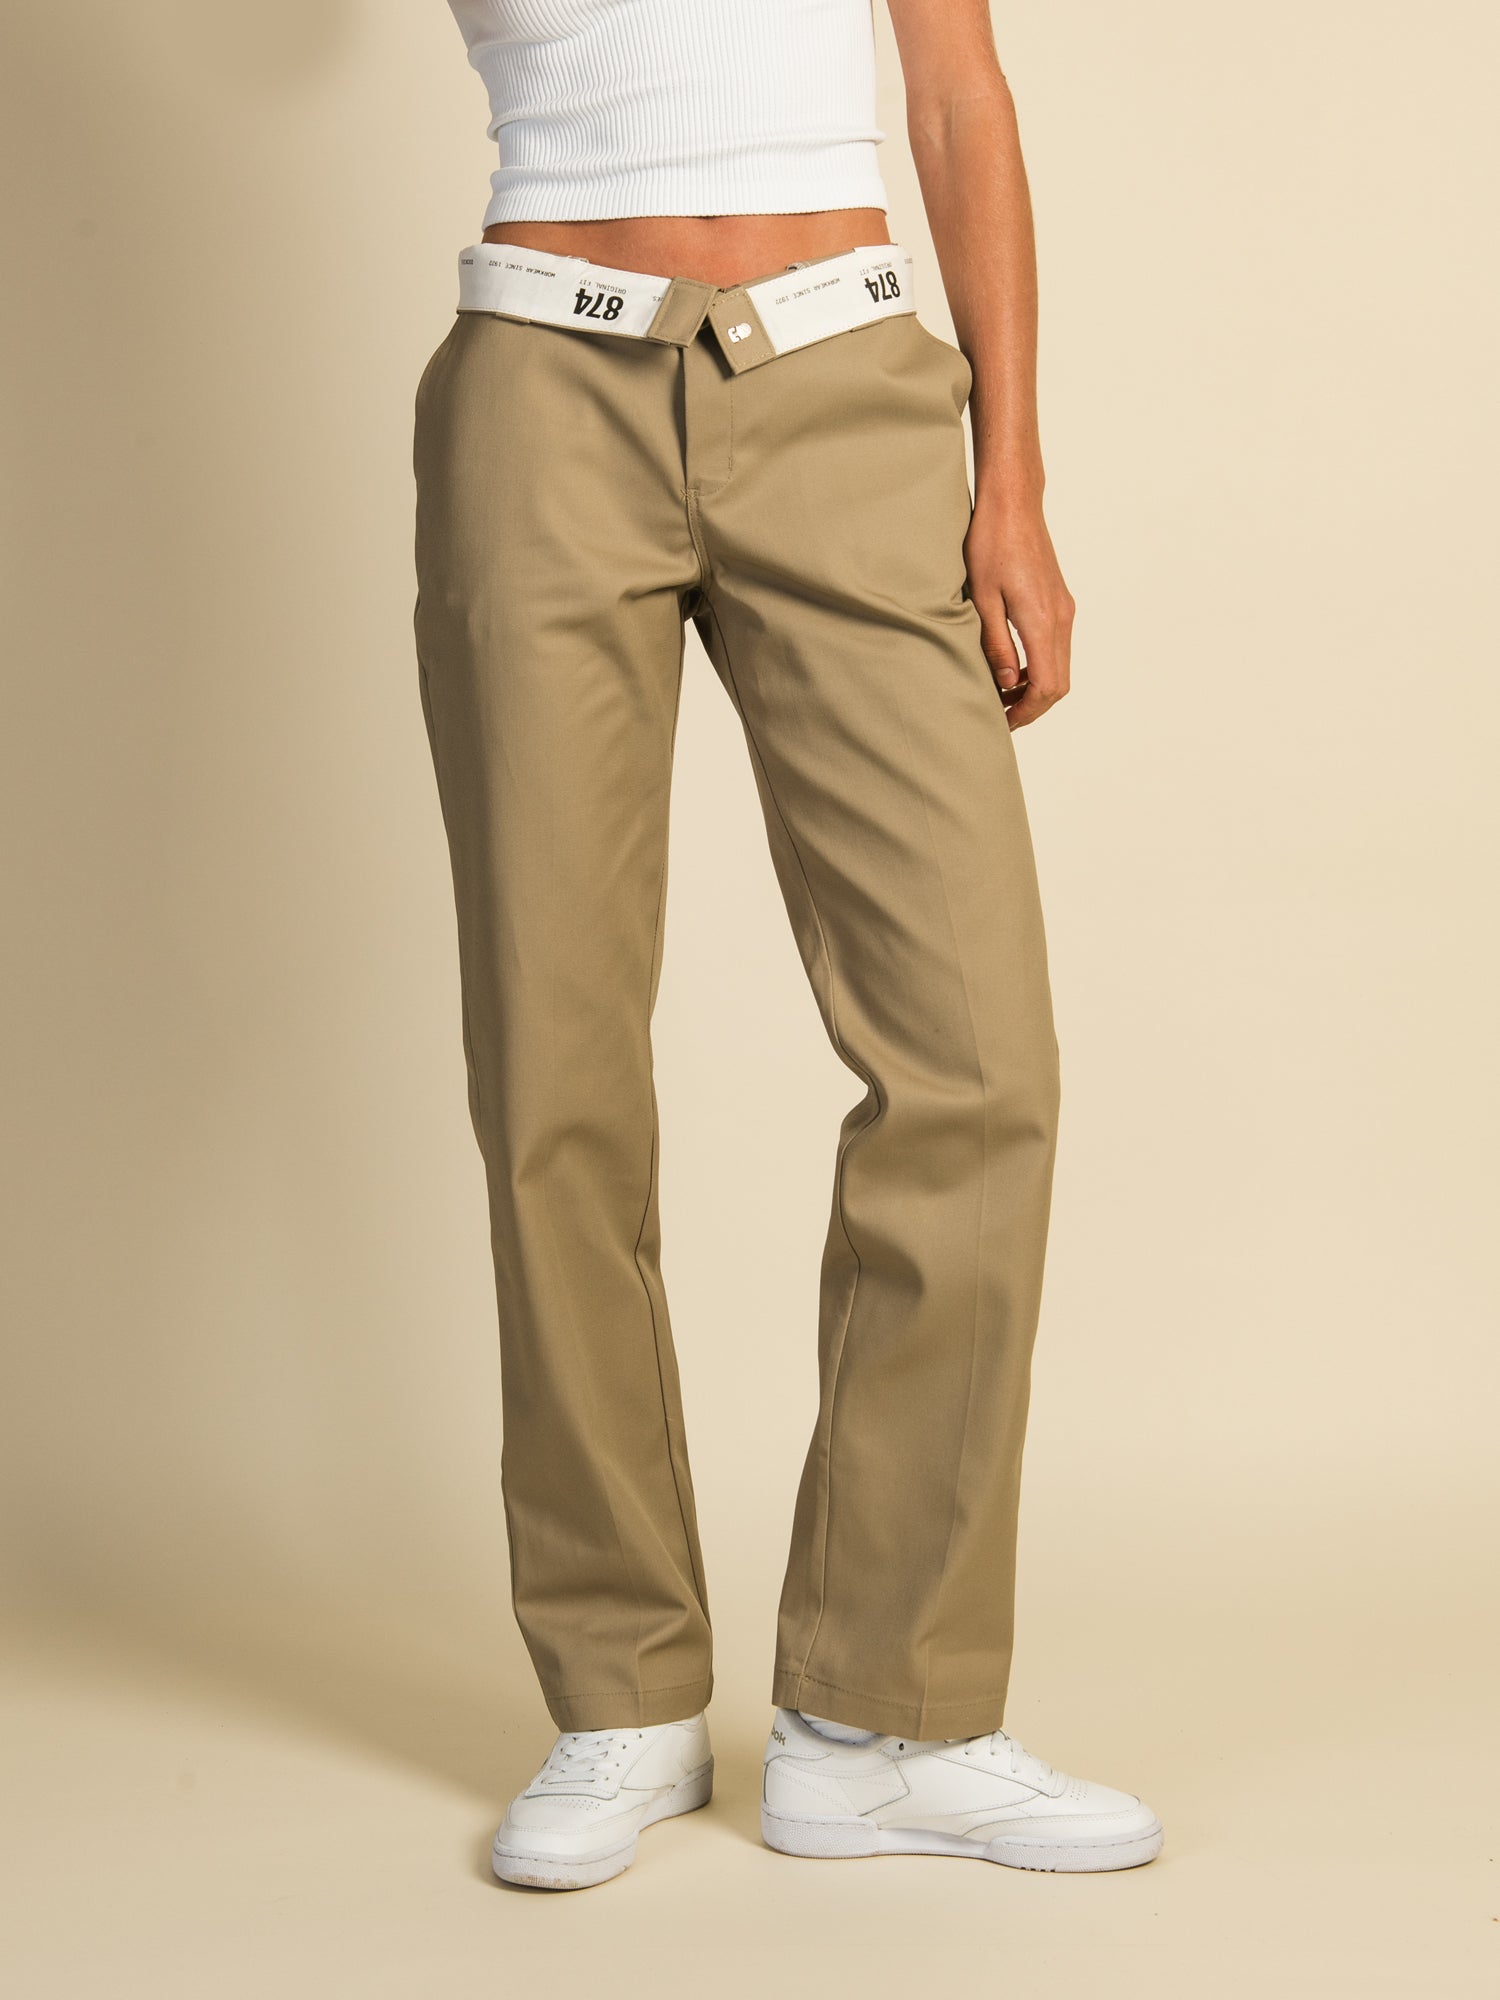 Lands' End Men's Traditional Stretch Twill Pants Sierra Khaki 30 x 36 NEW  501574 - Walmart.com